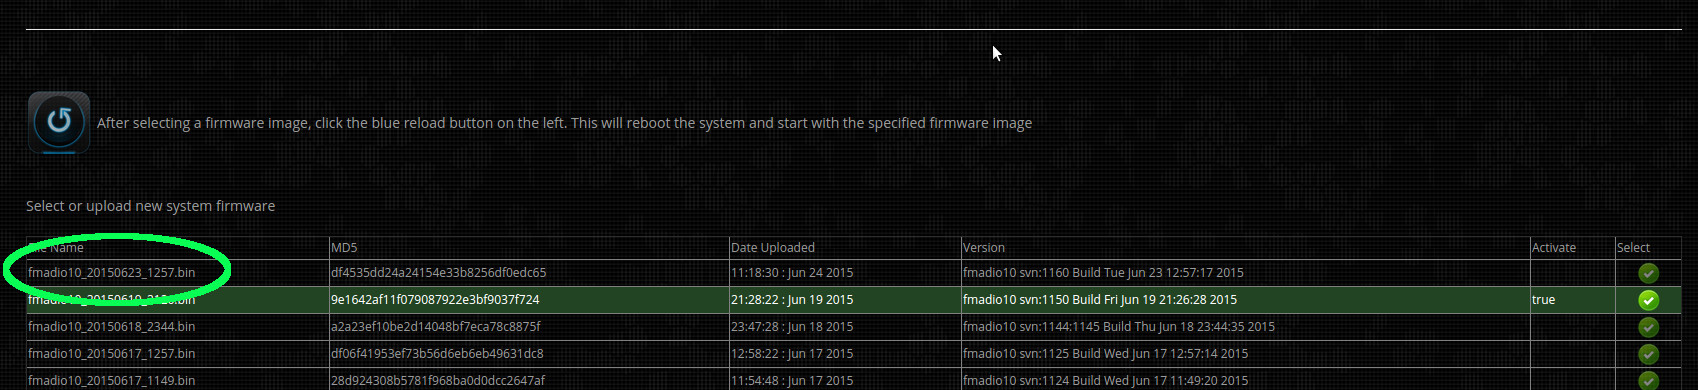 10g packet capture firmware update upload